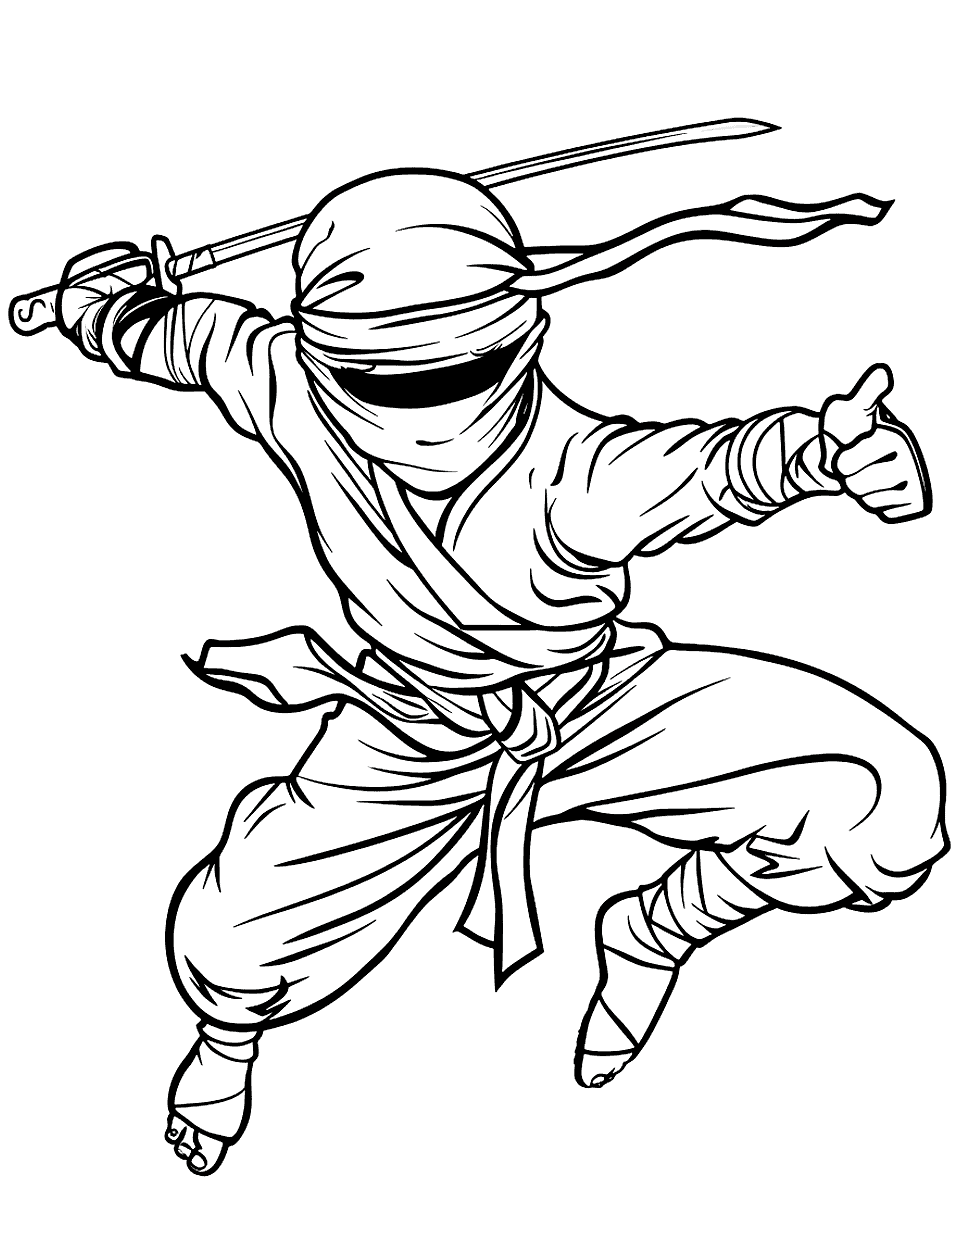 Ninja Leap Coloring Page - Ninja in mid-air, performing an acrobatic leap.